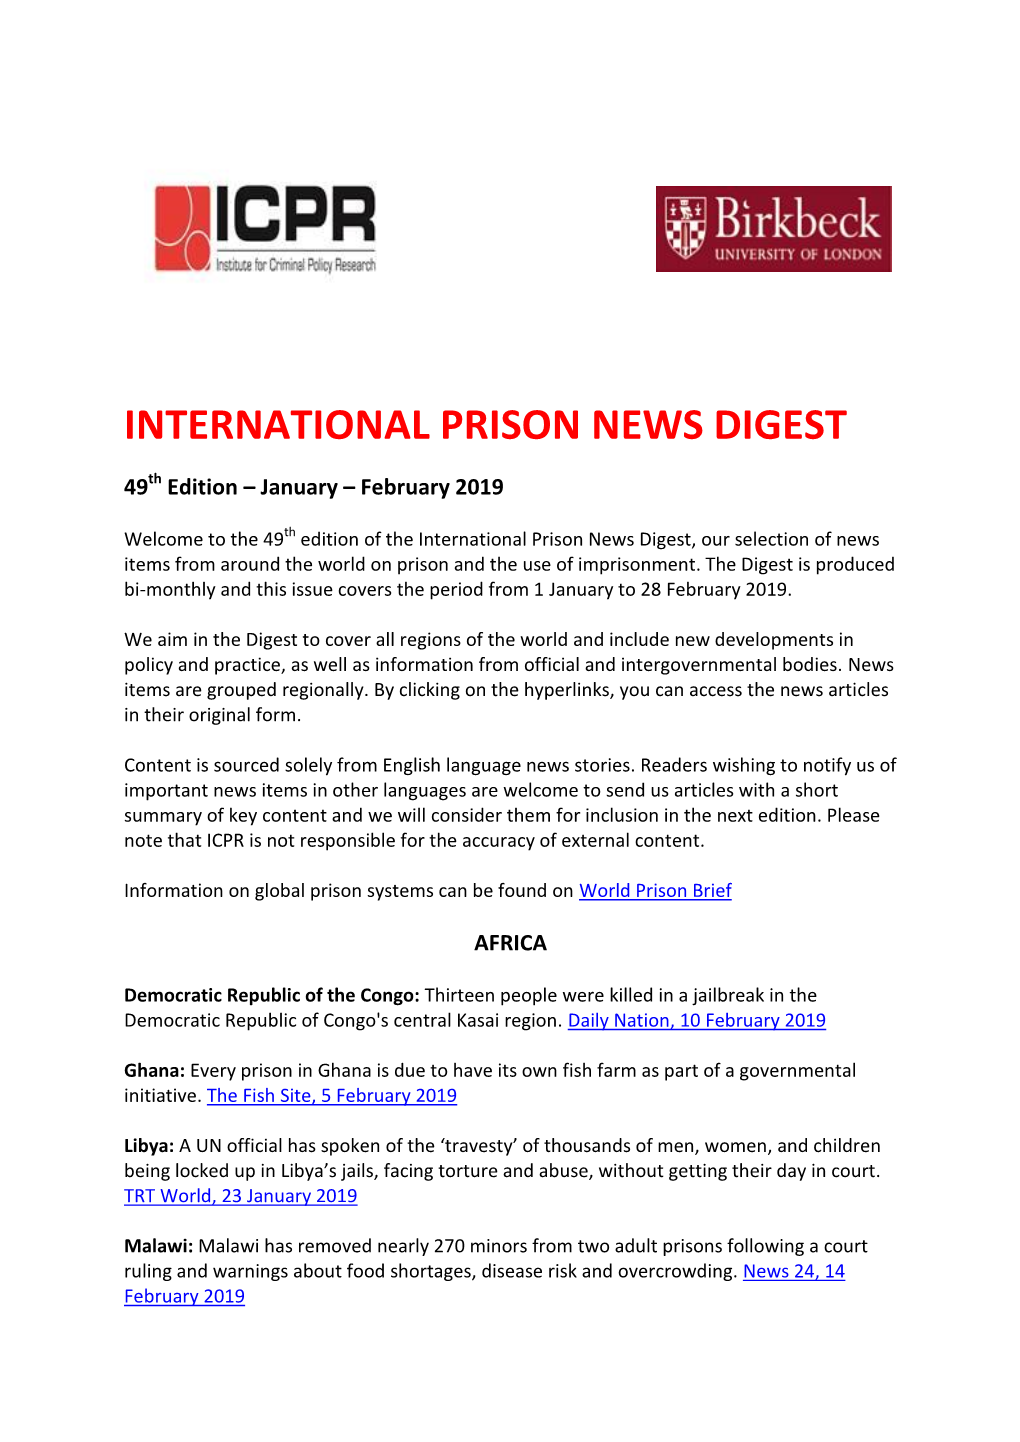 International Prison News Digest